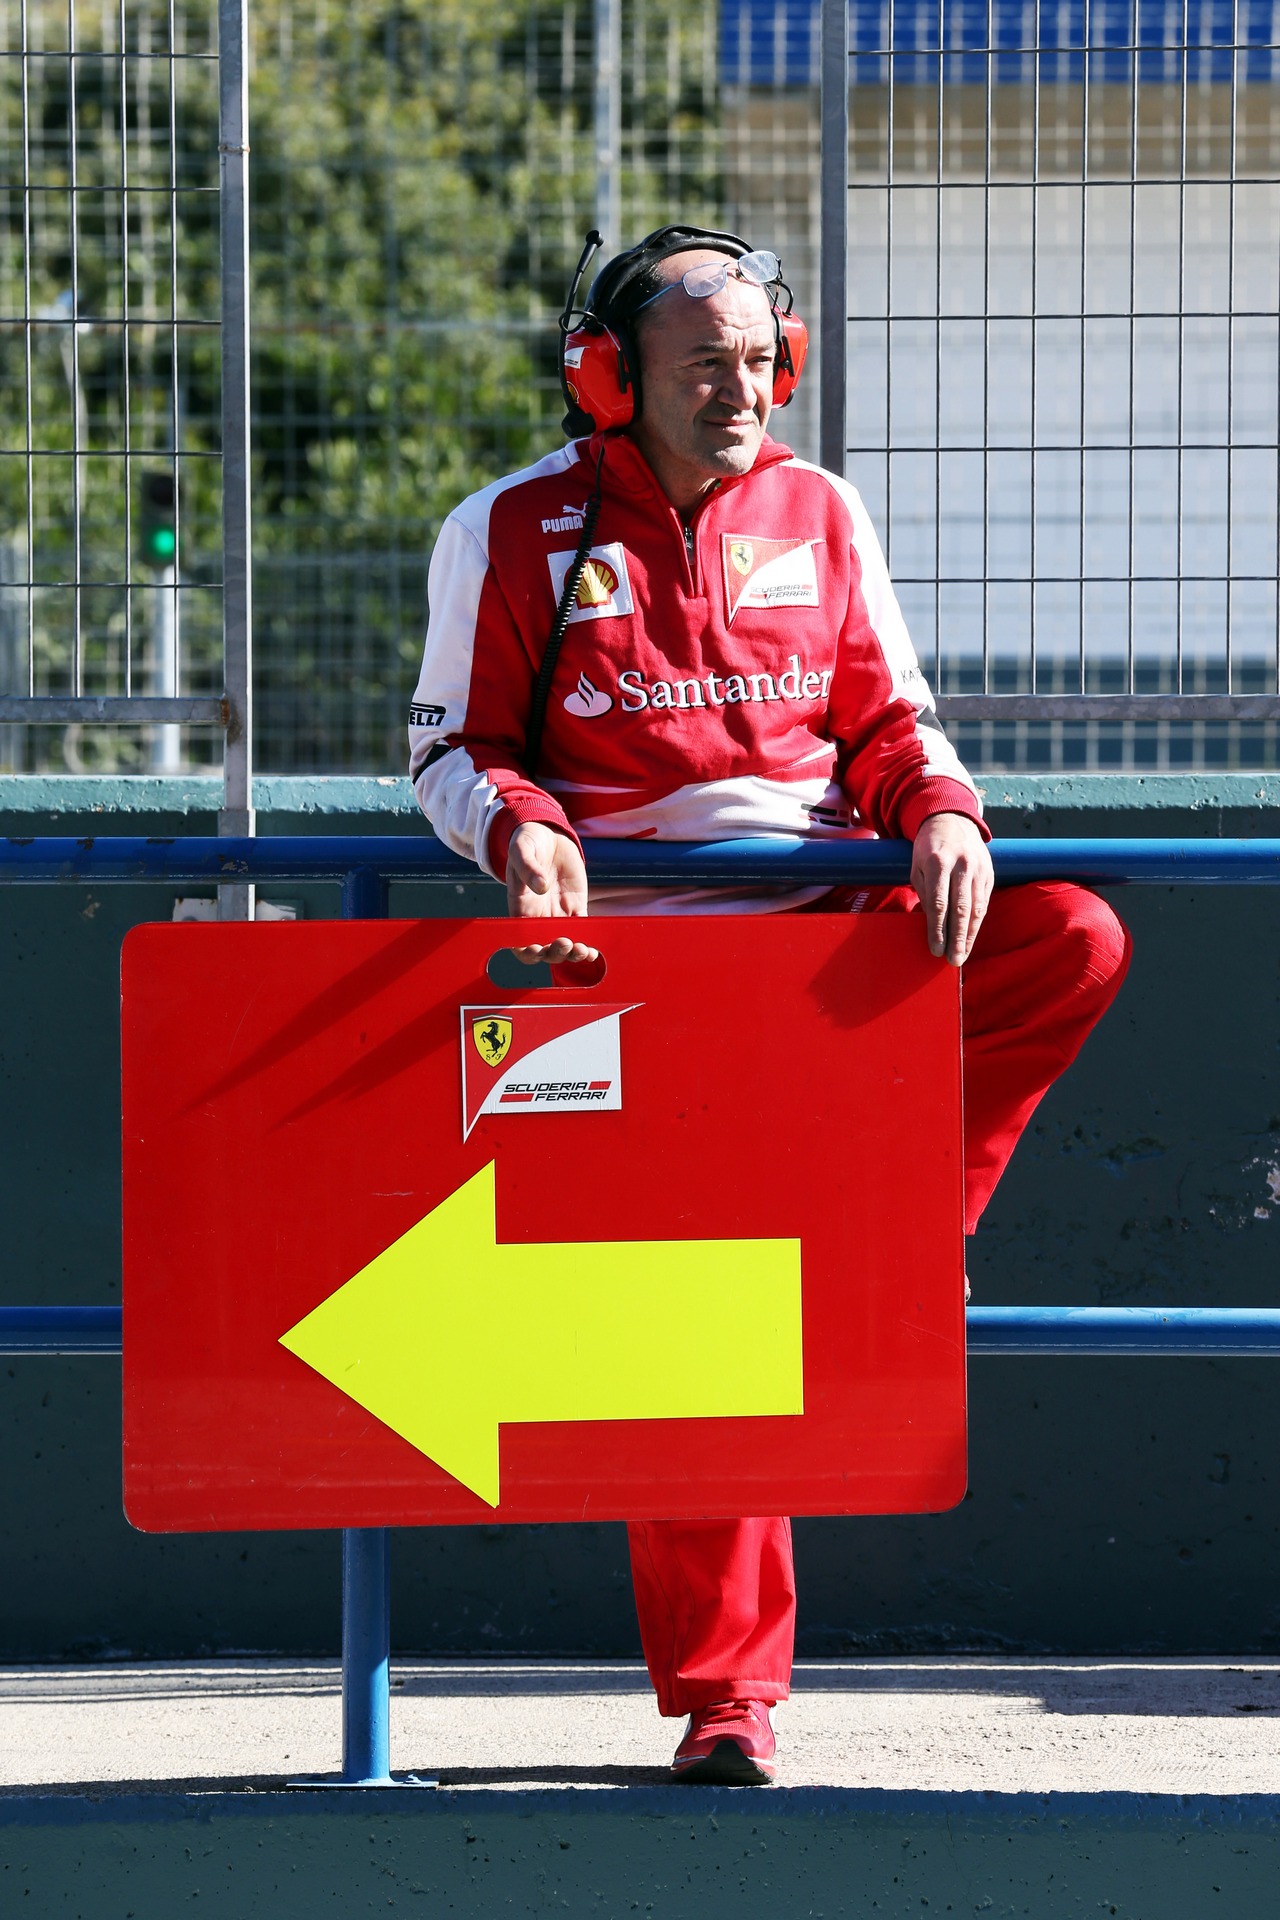 Ferrari pit board holder.
